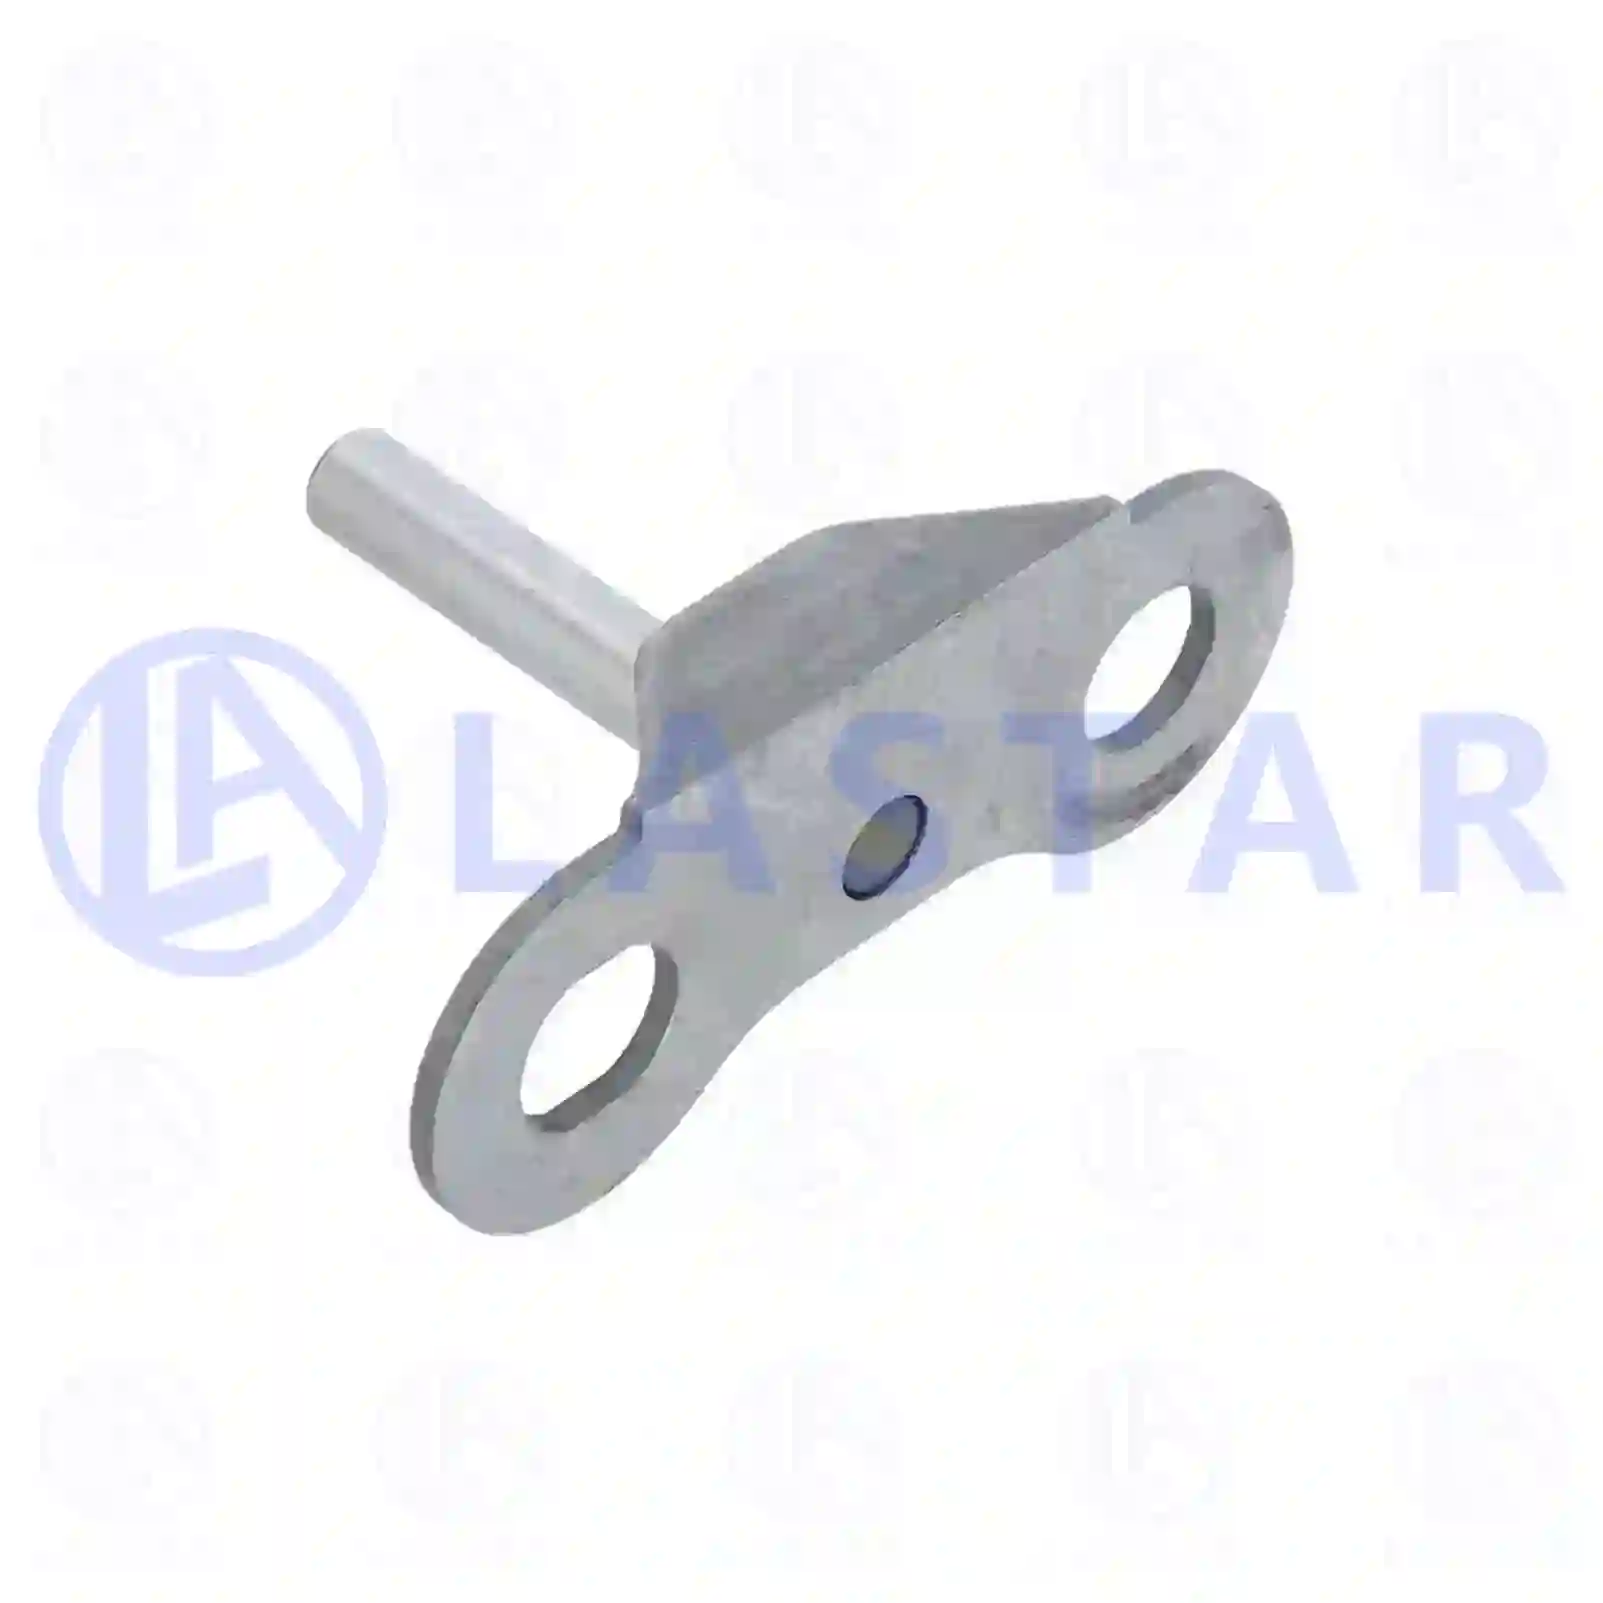  Cylinder Head Guide pin, la no: 77703486 ,  oem no:1677963, ZG01369-0008 Lastar Spare Part | Truck Spare Parts, Auotomotive Spare Parts